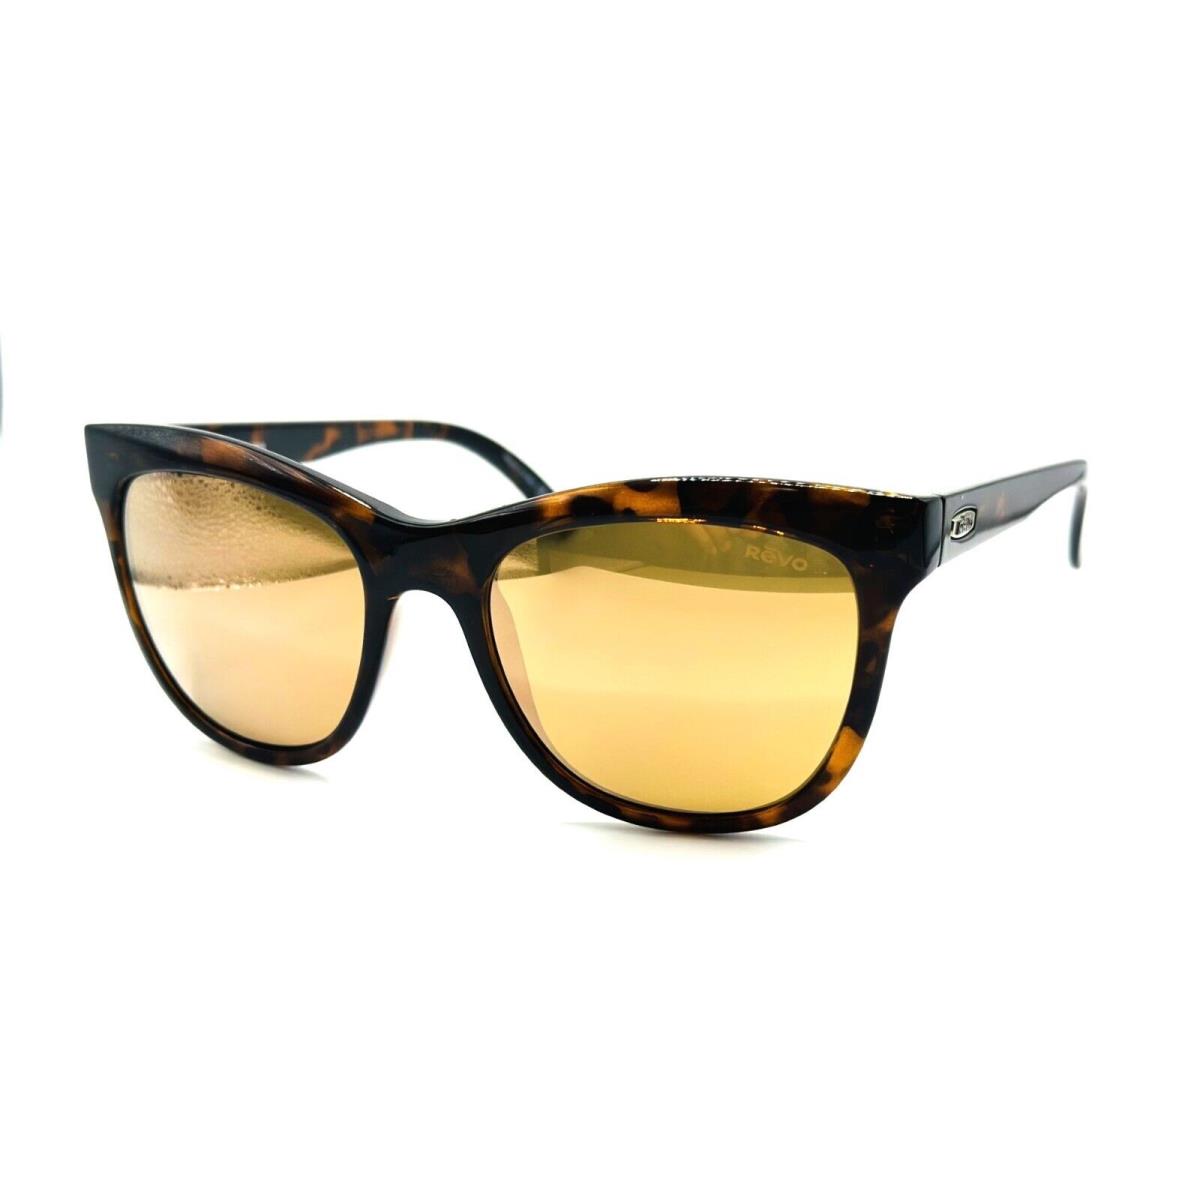 Revo Leigh RE 1069 02 Tortoise/brown Women Sunglasses 52mm